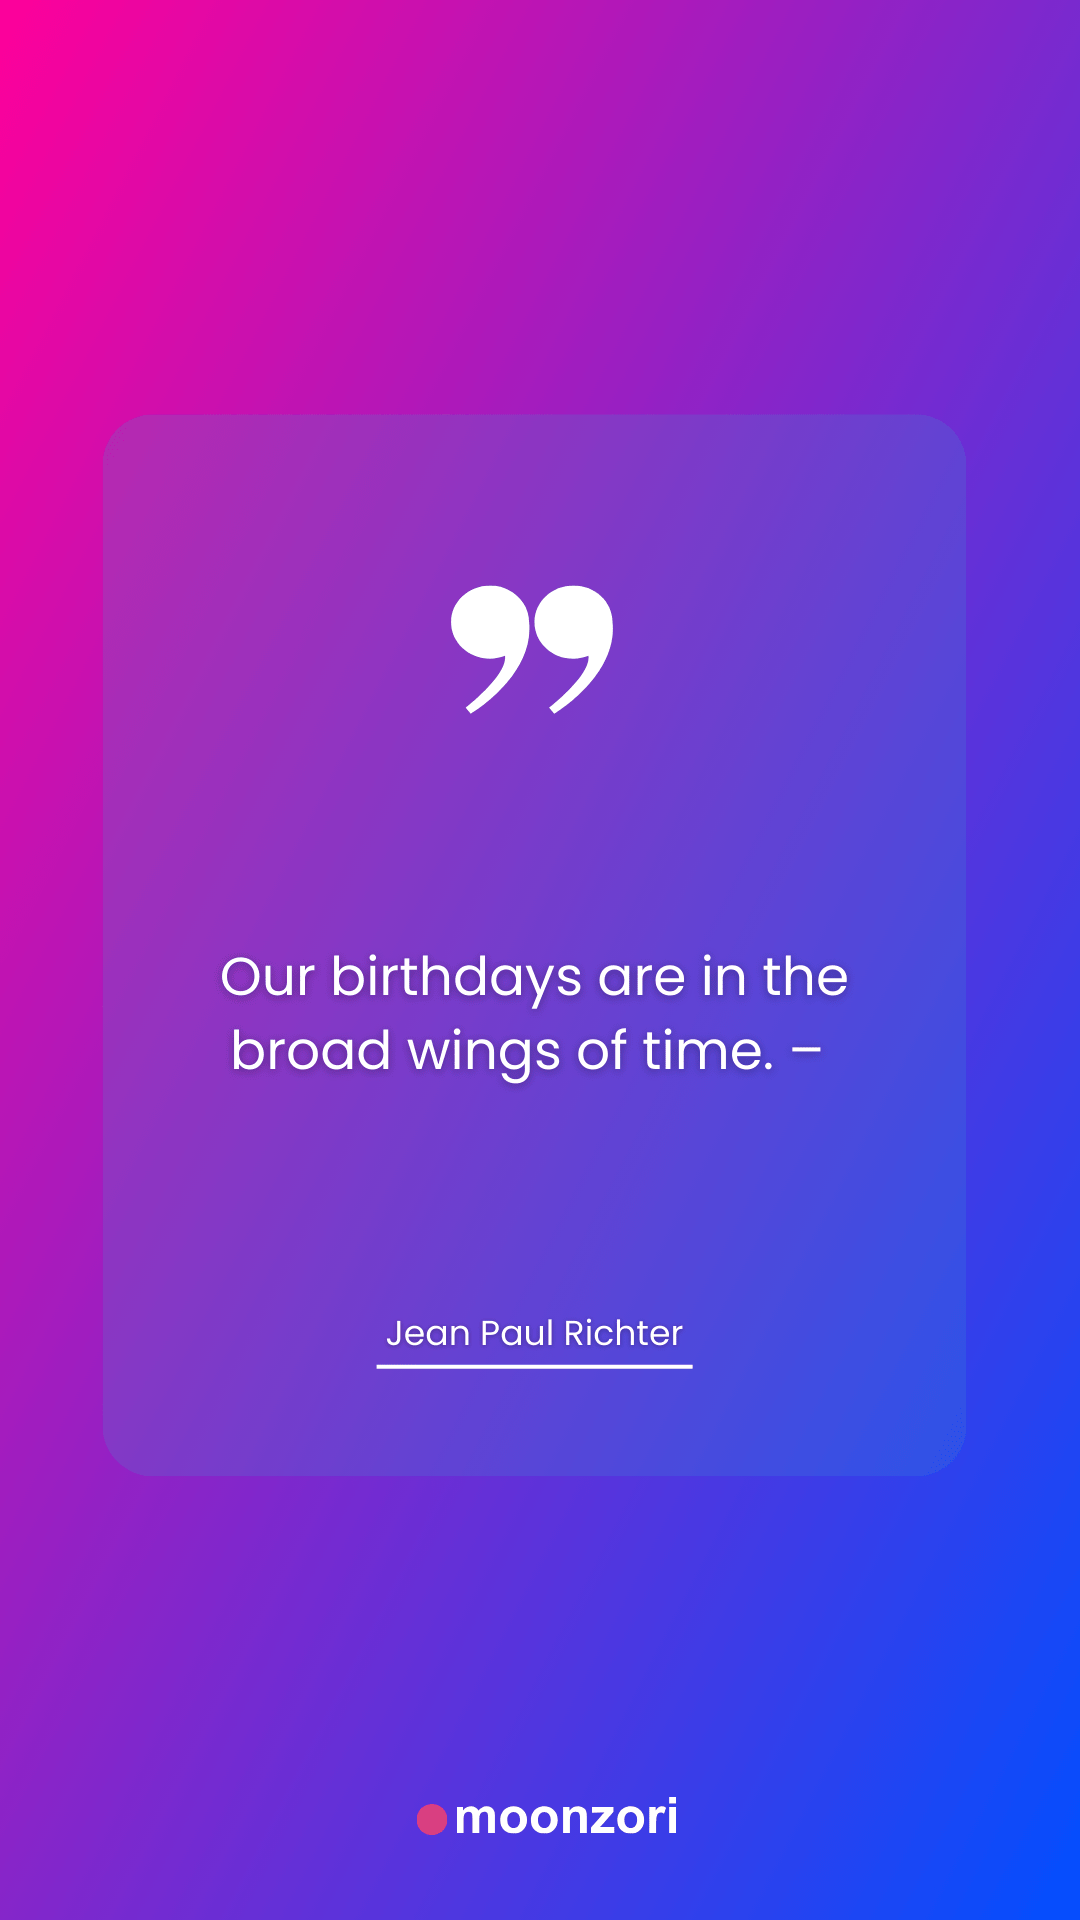 Birthday Quote of Jean Paul Richter - Moonzori